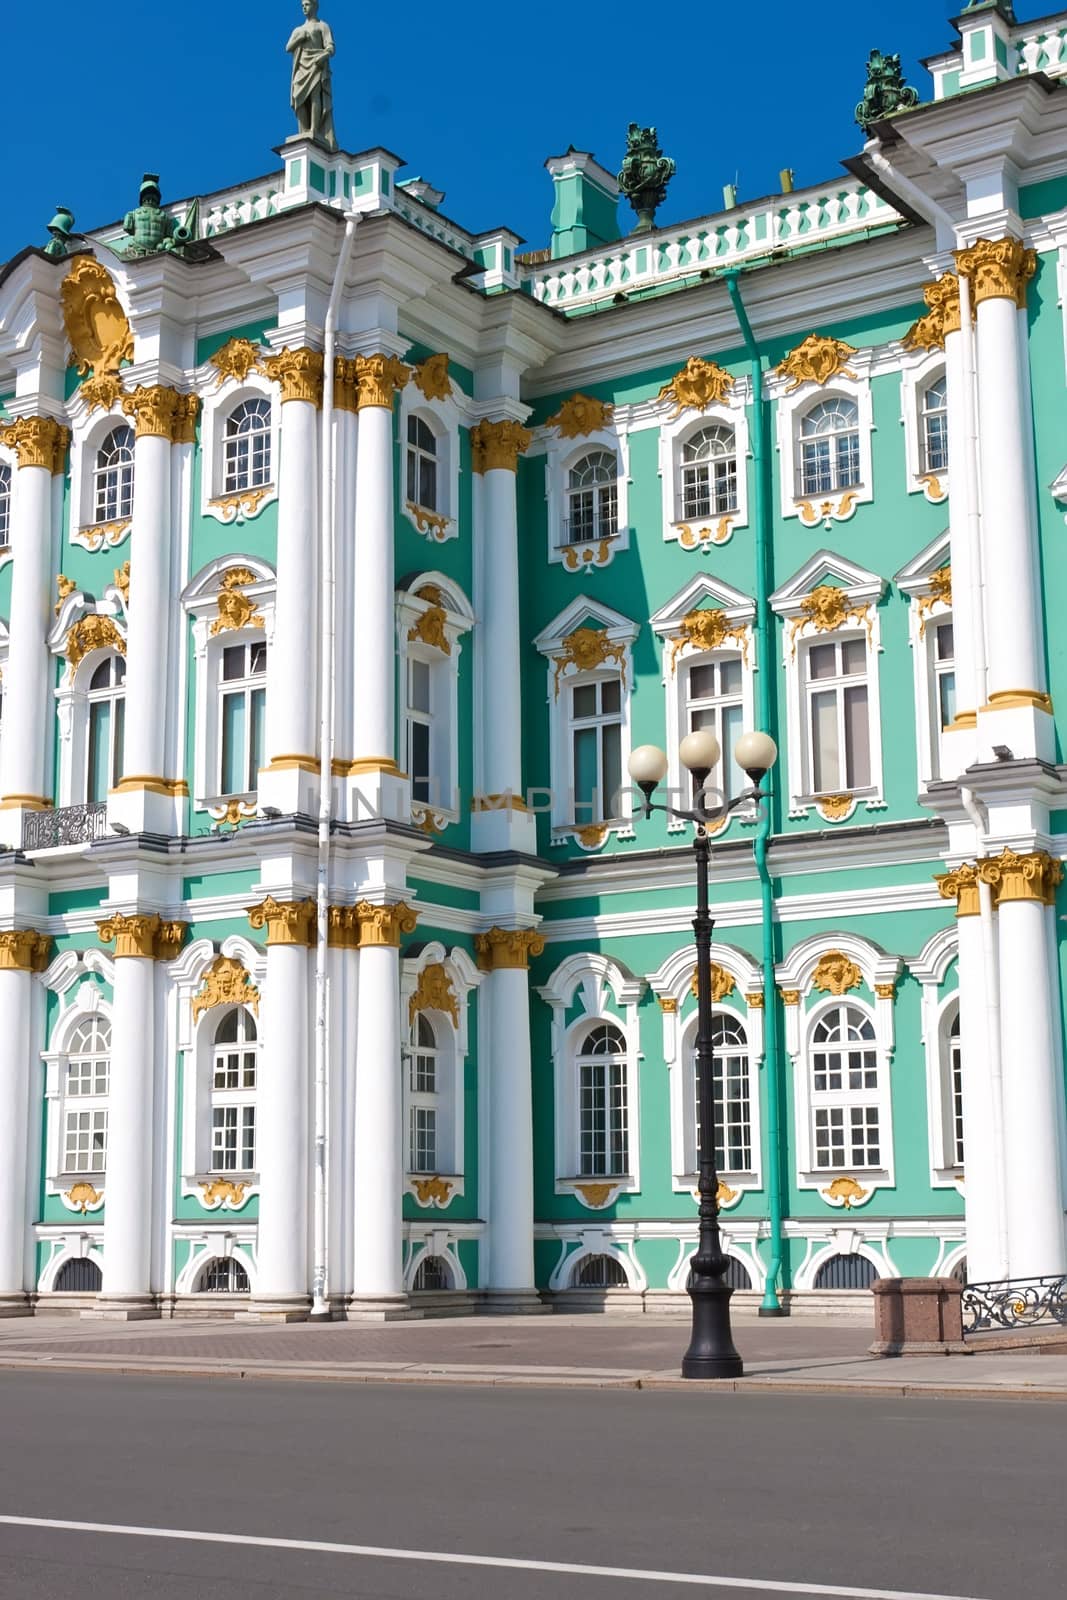 Hermitage Museum - Winter palace of Russian kings,  Saint Petersburg, Russia